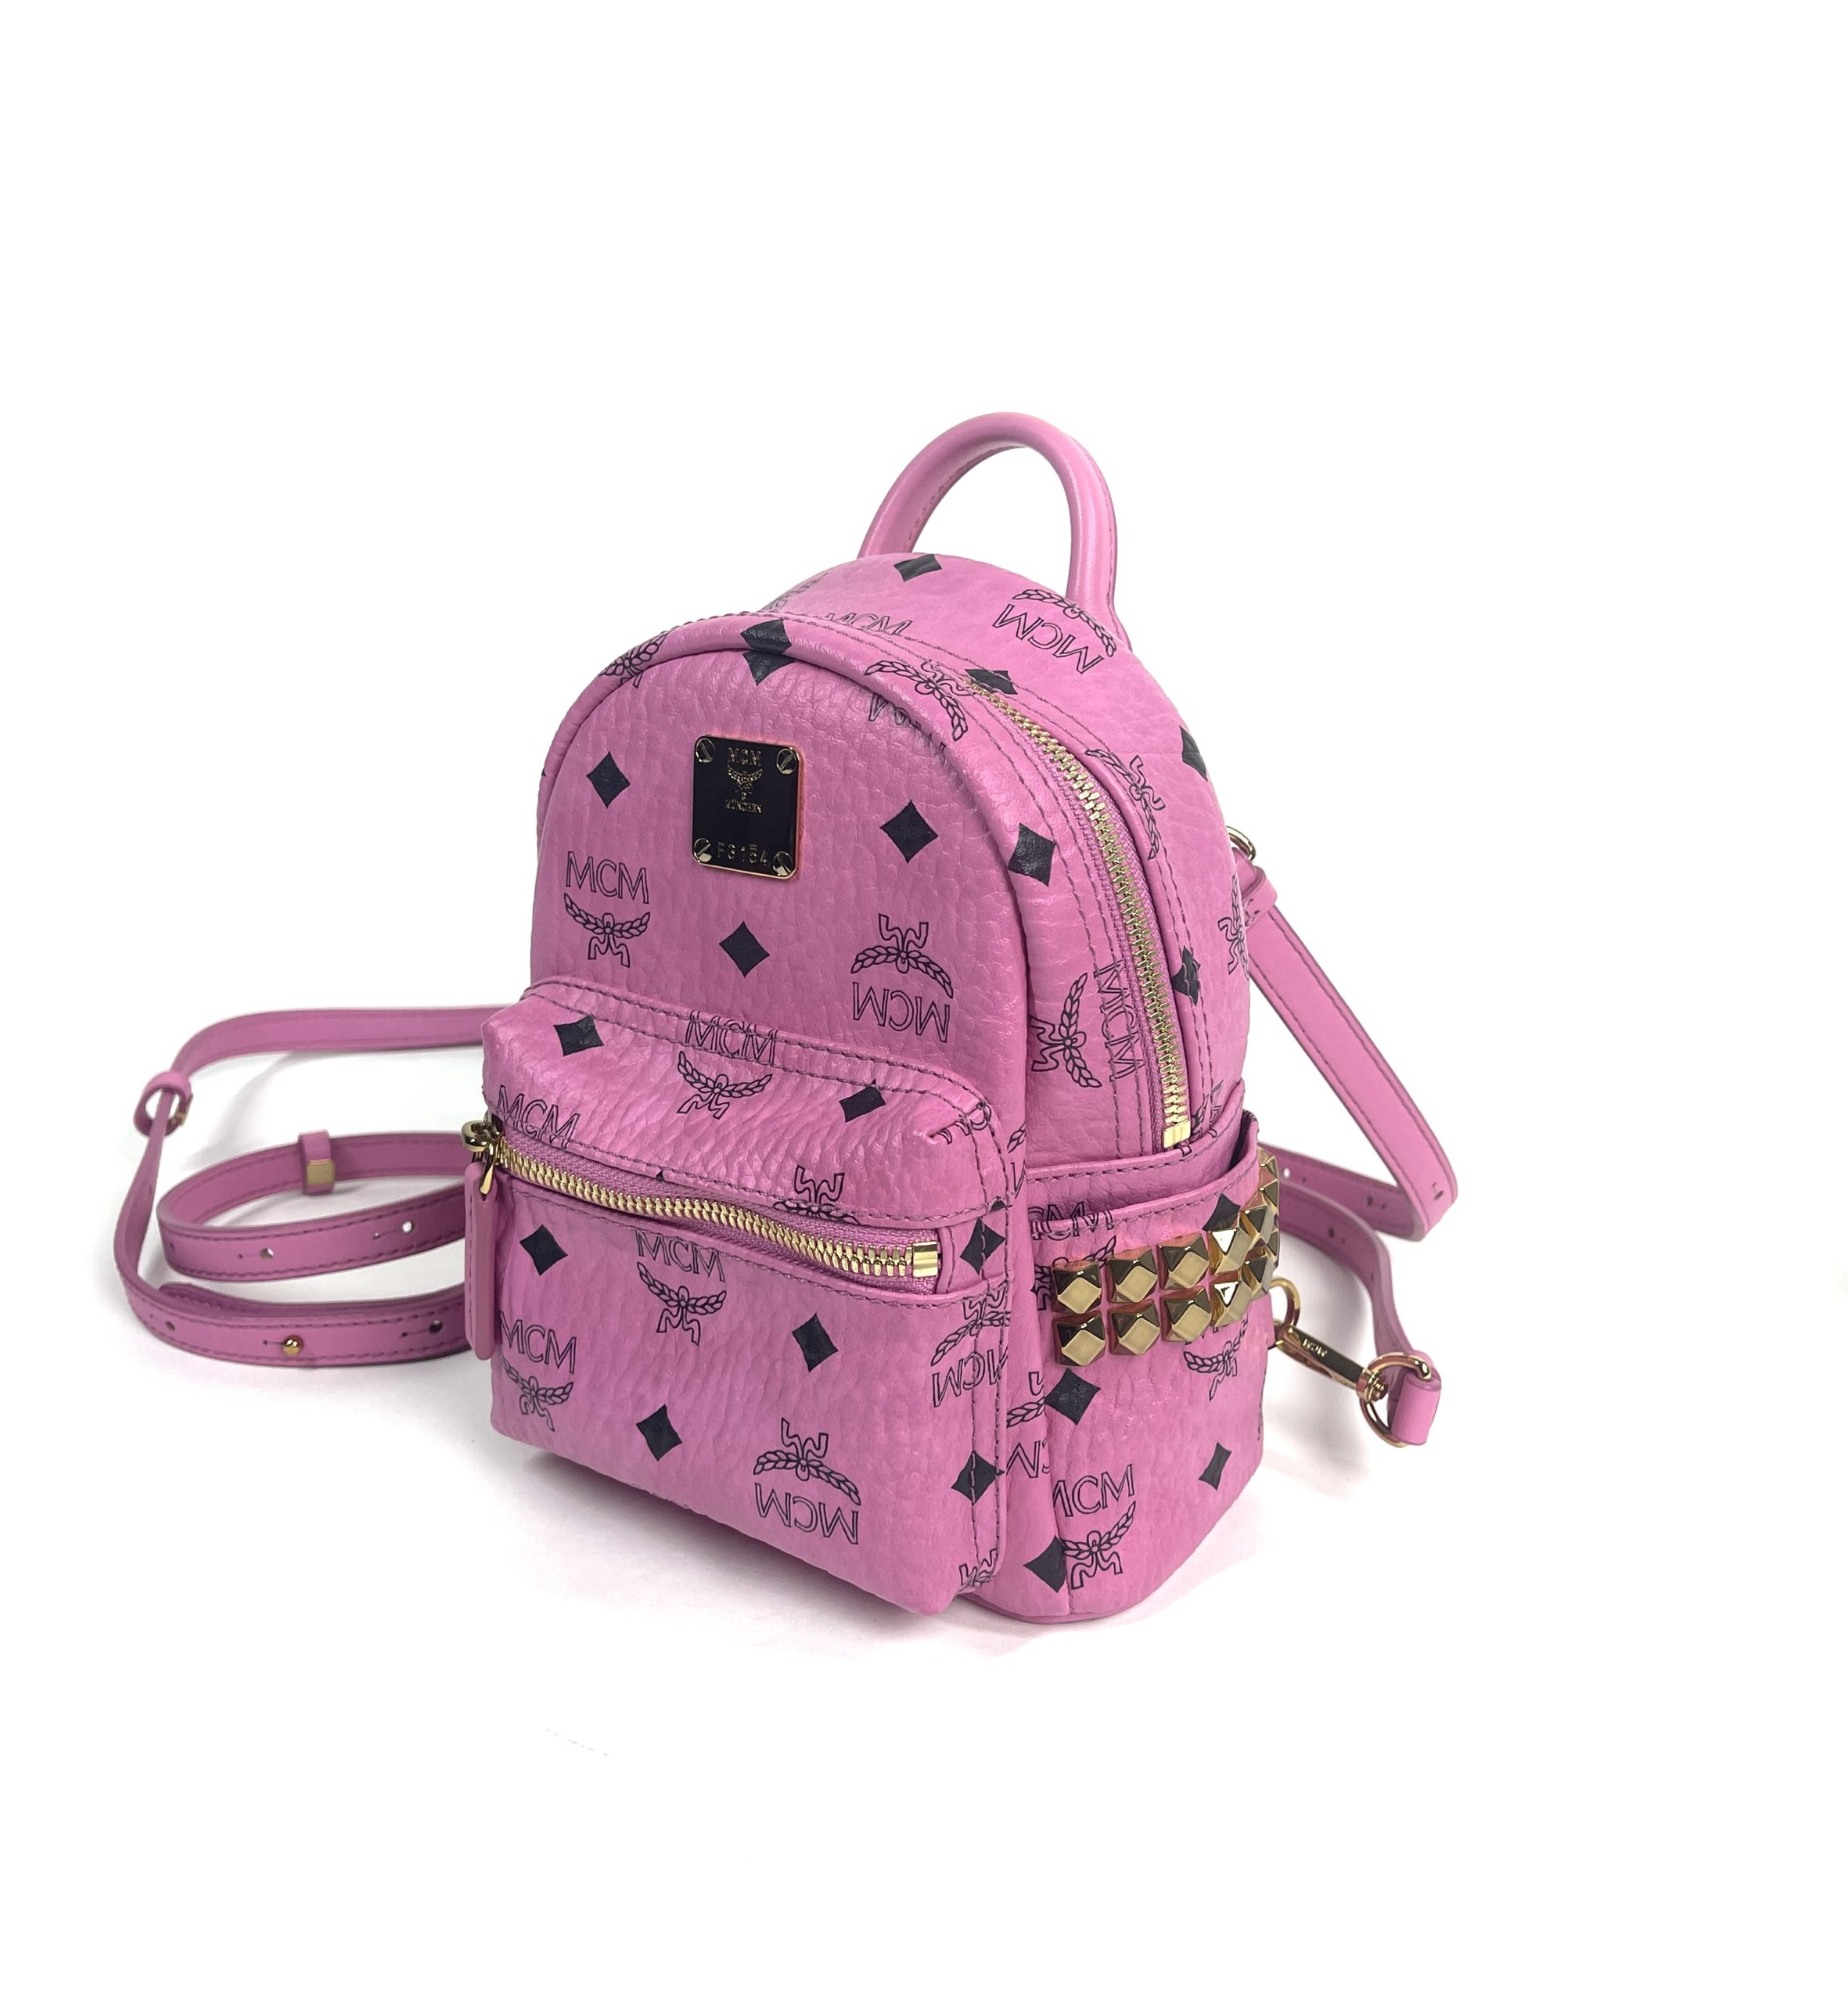 MCM backpack pink